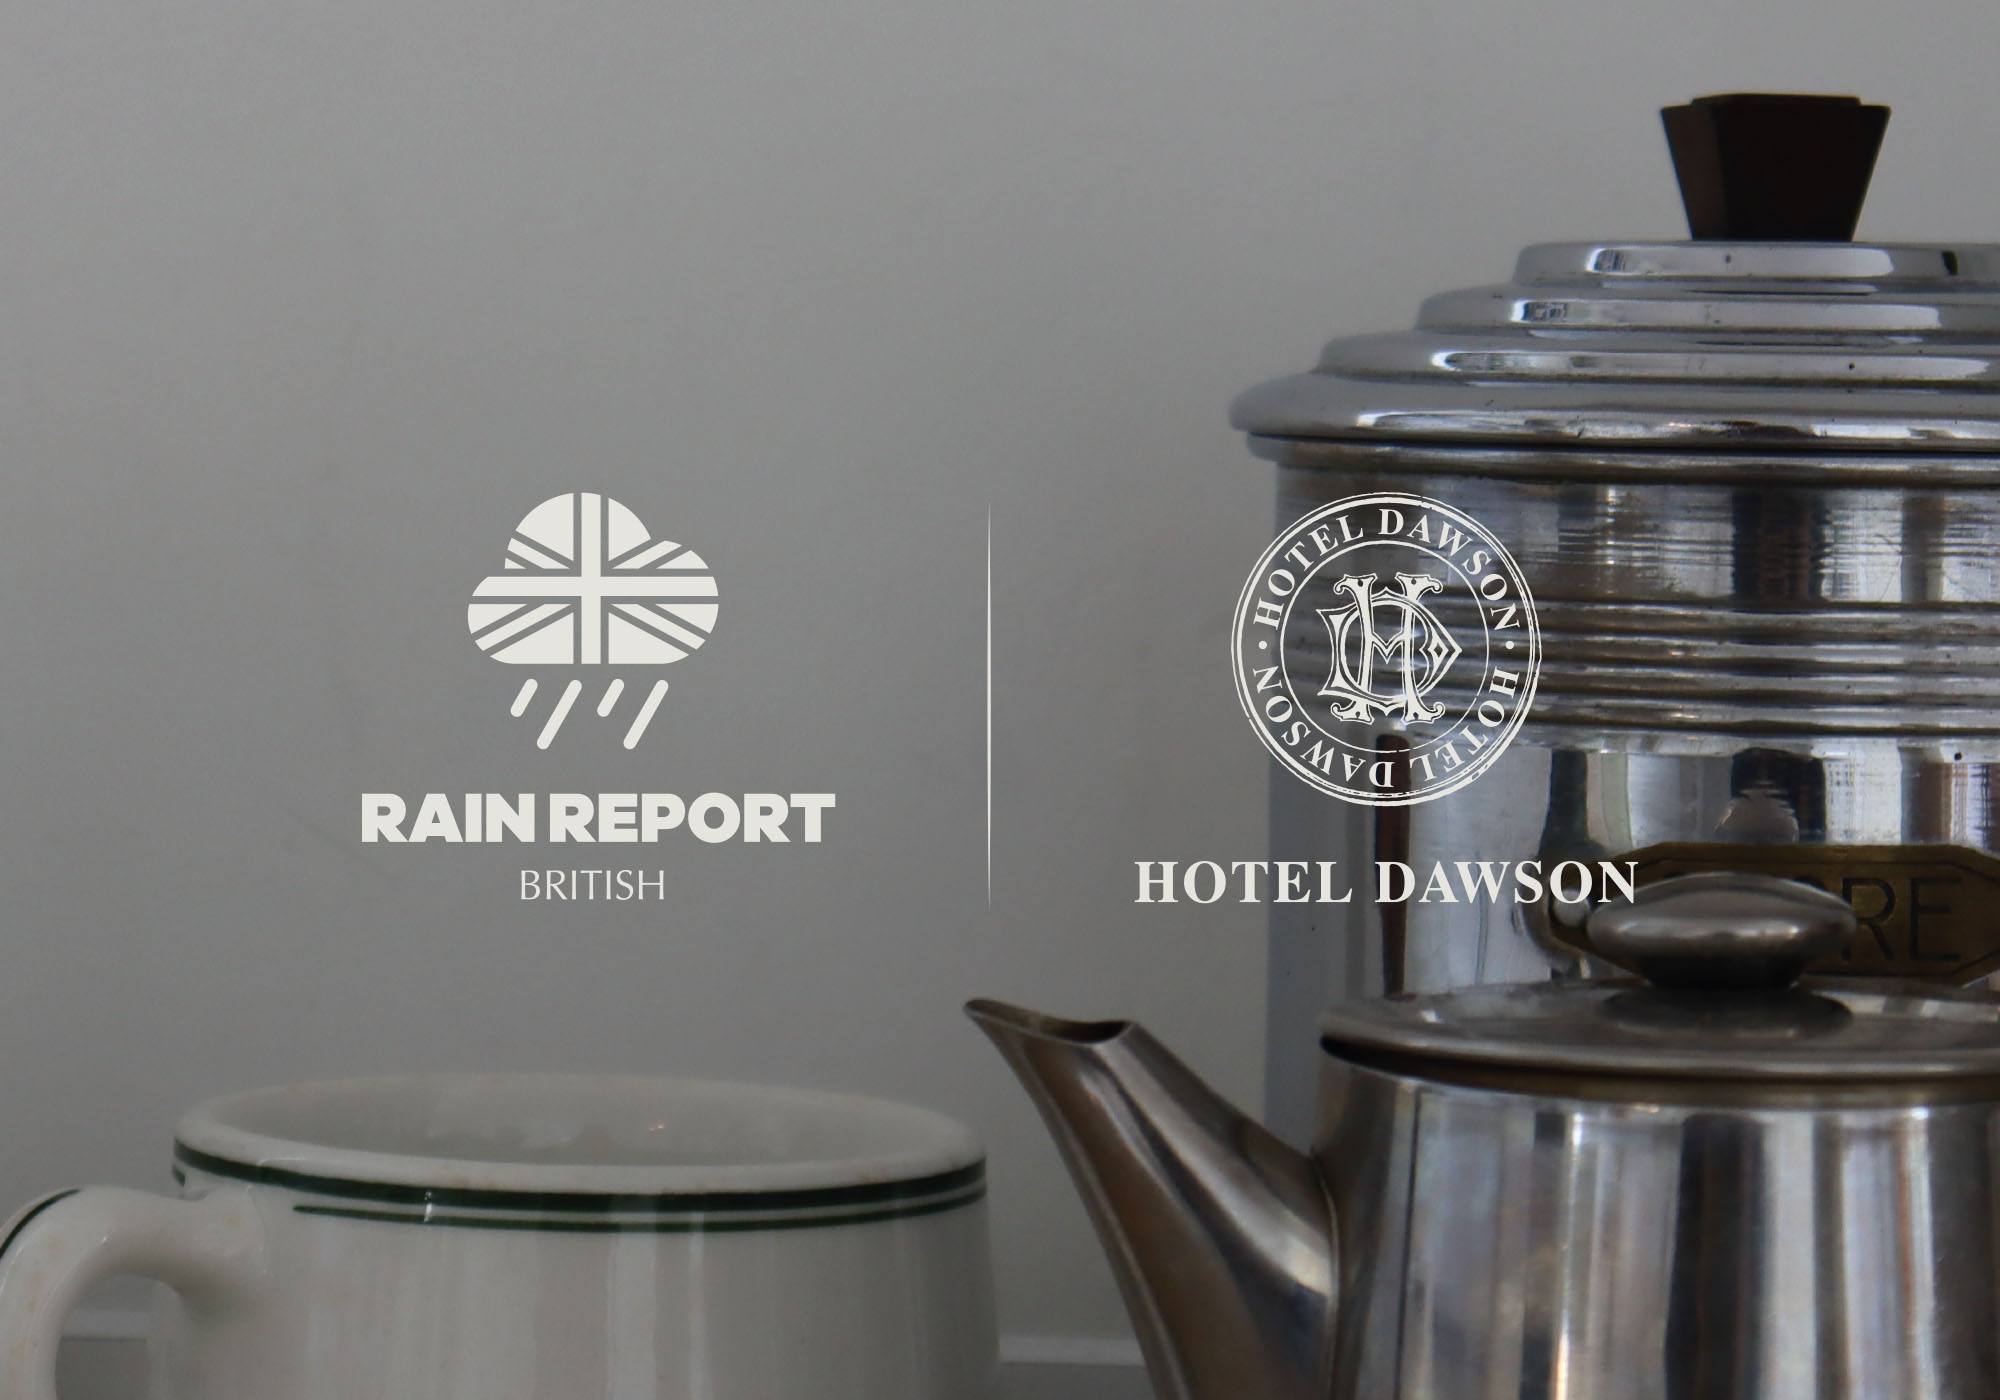 Rain Report X Hotel Dawson